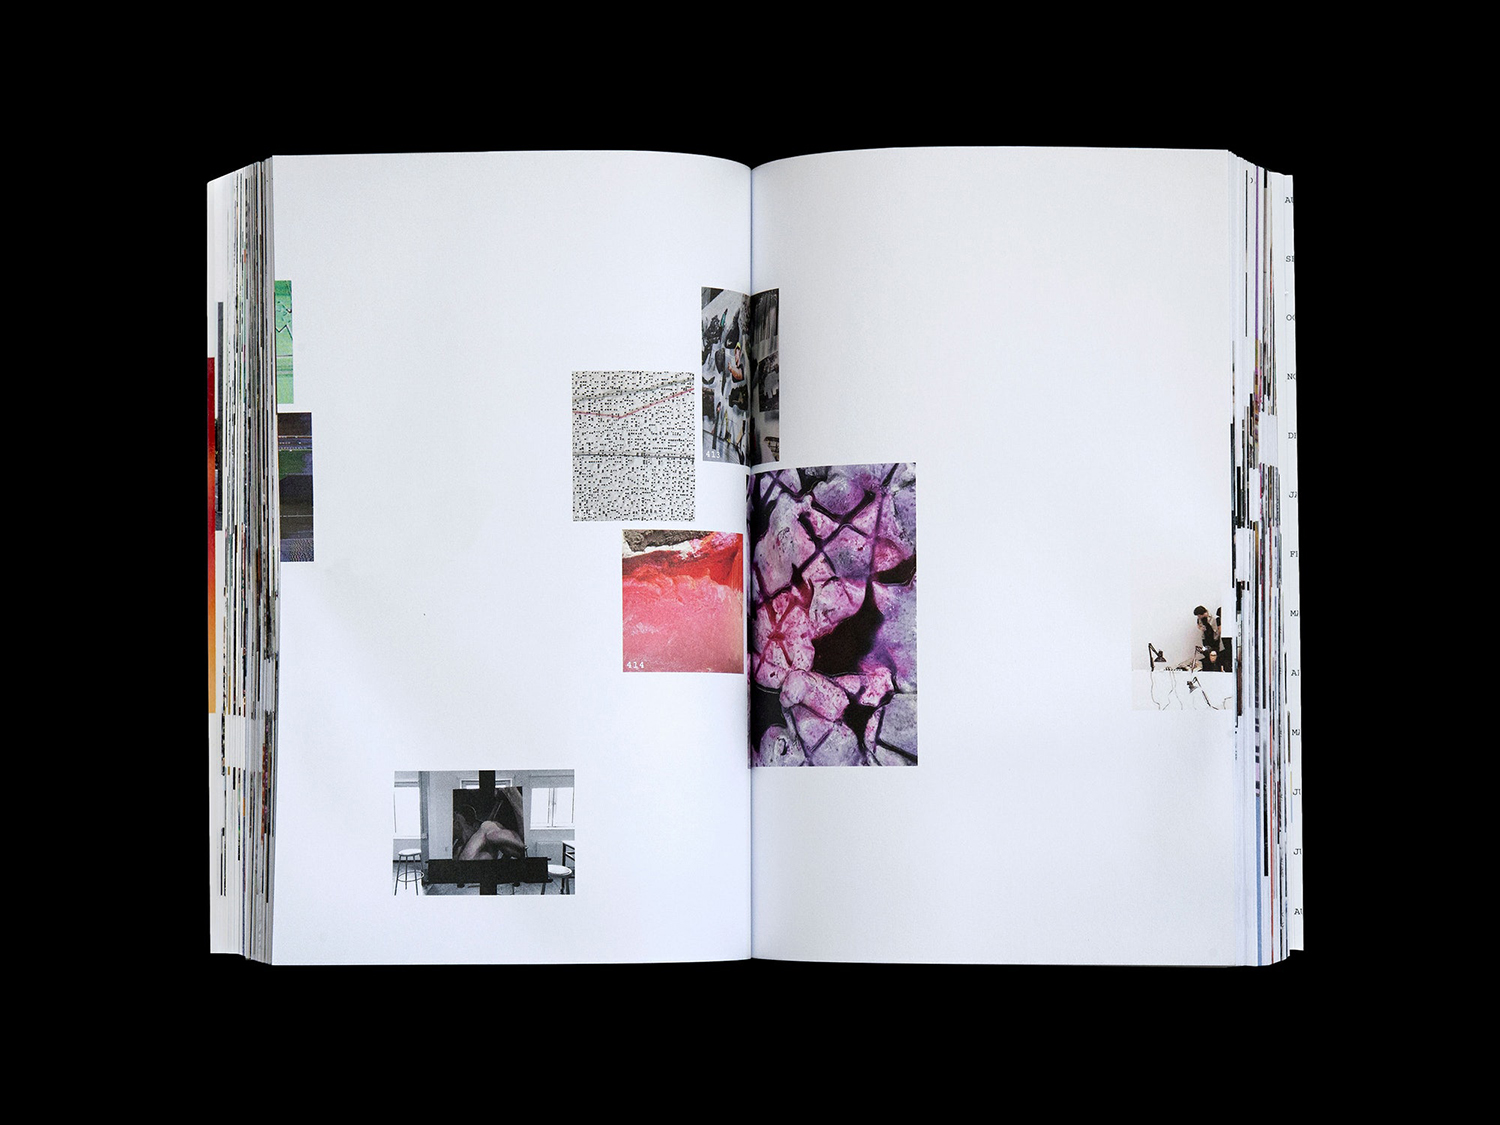 Platform 10: Live Feed a book designed by Pentagram partner Natasha Jen for the Harvard University Graduate School of Design